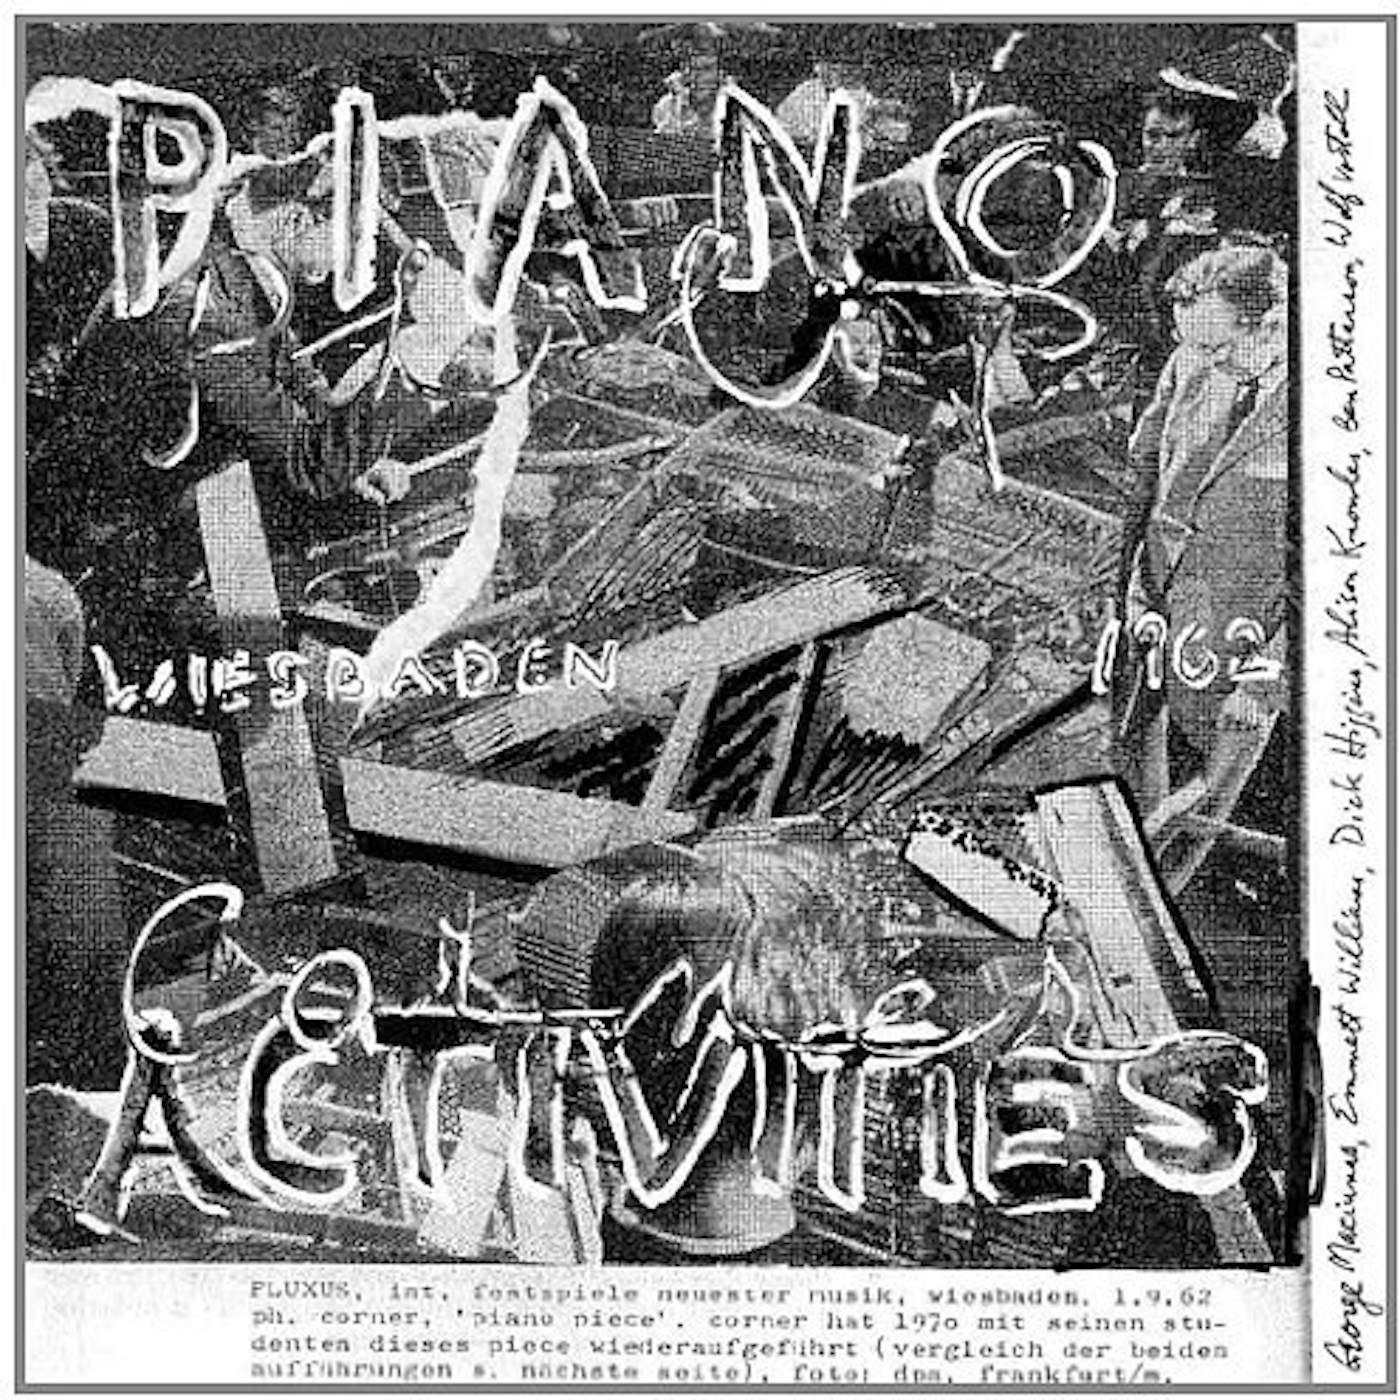 Philip Corner PIANO ACTIVITIES Vinyl Record